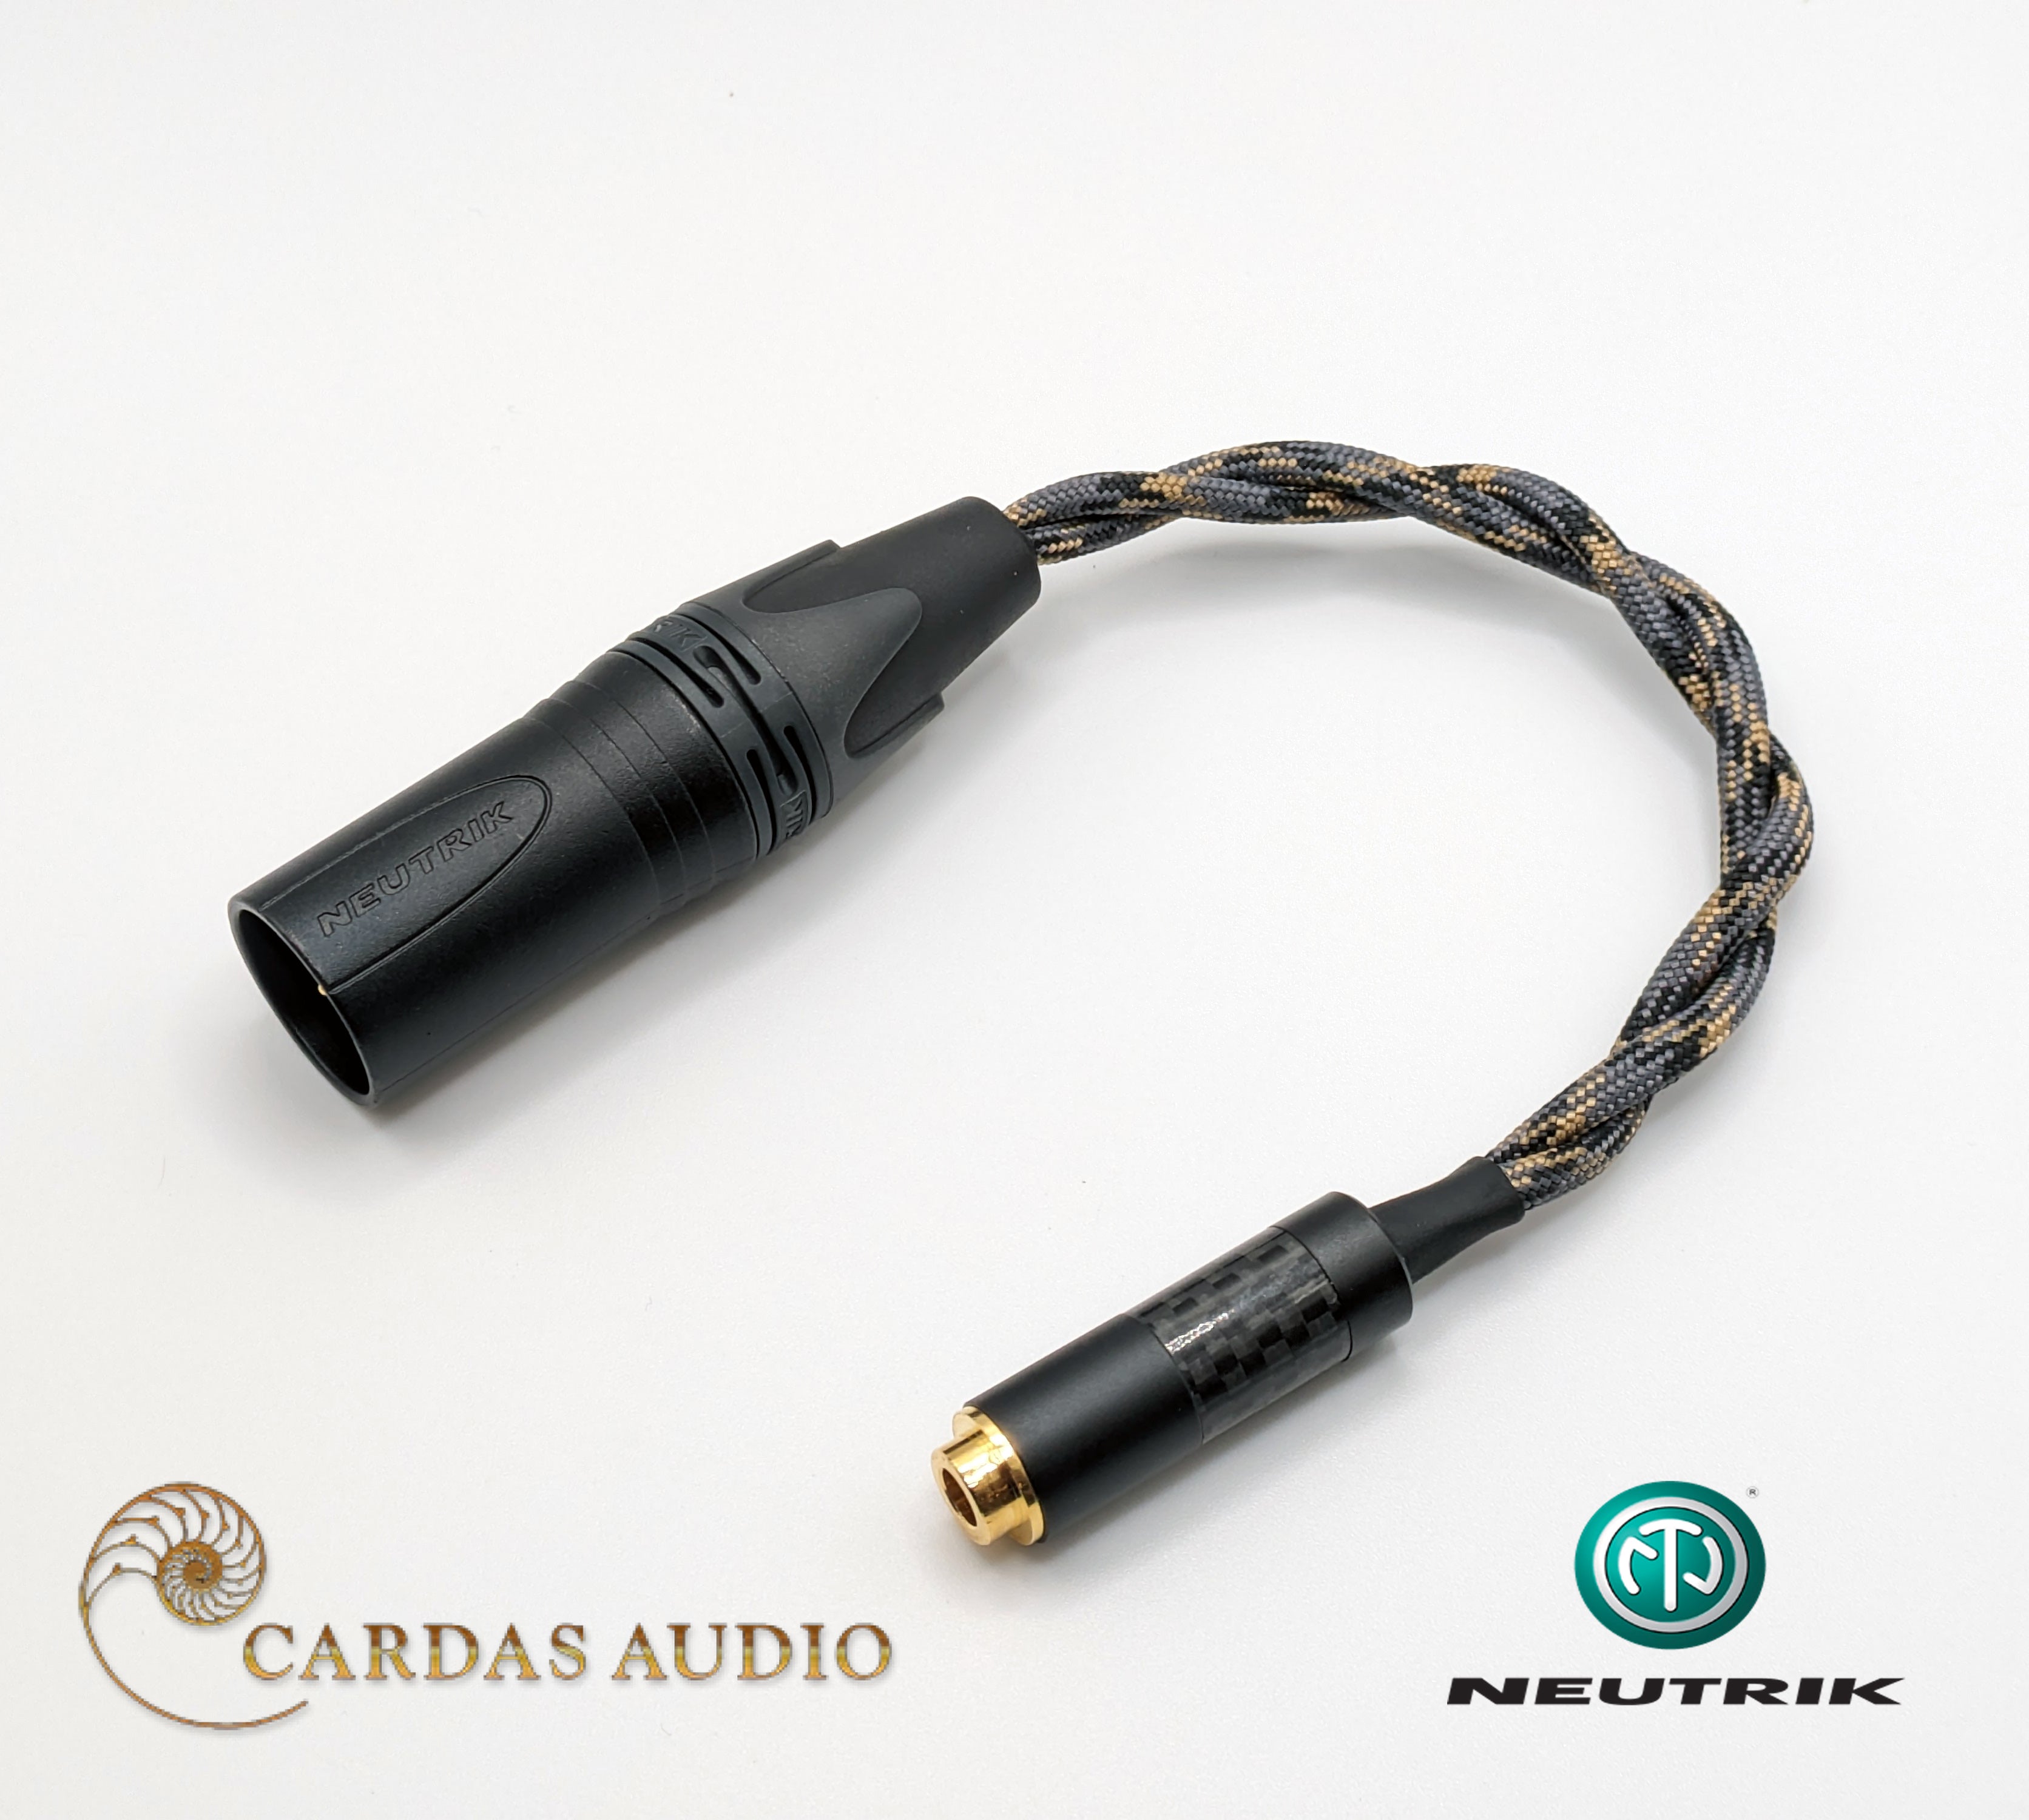 Cardas Audio - Female 4.4mm to Male 4 Pin XLR Adaptor Cable - Neutrik NC4MXX-B - Cardas 24AWG